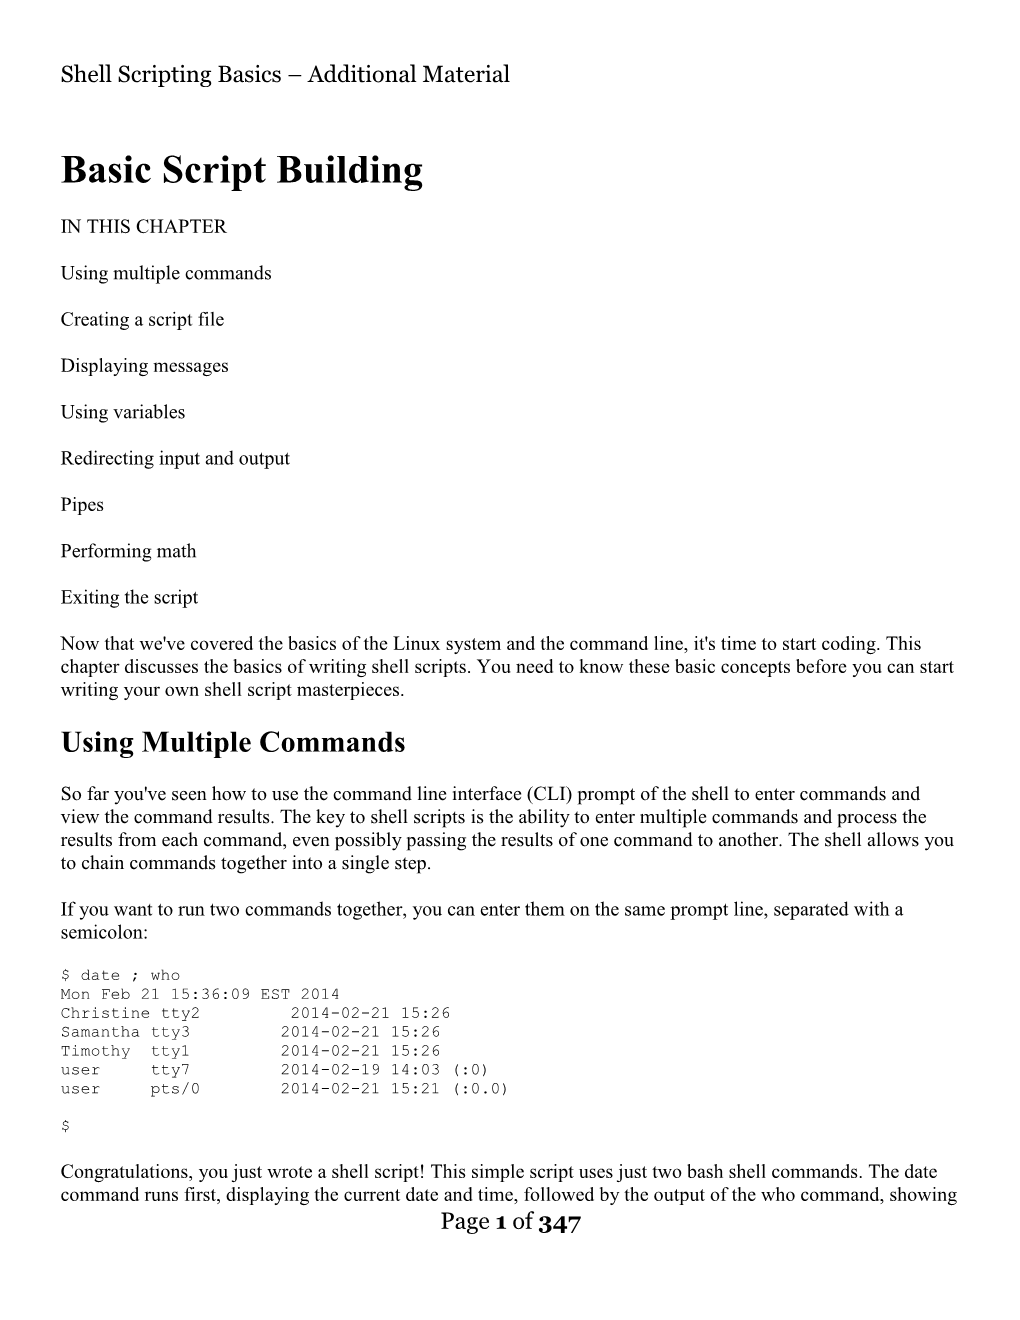 Basic Script Building